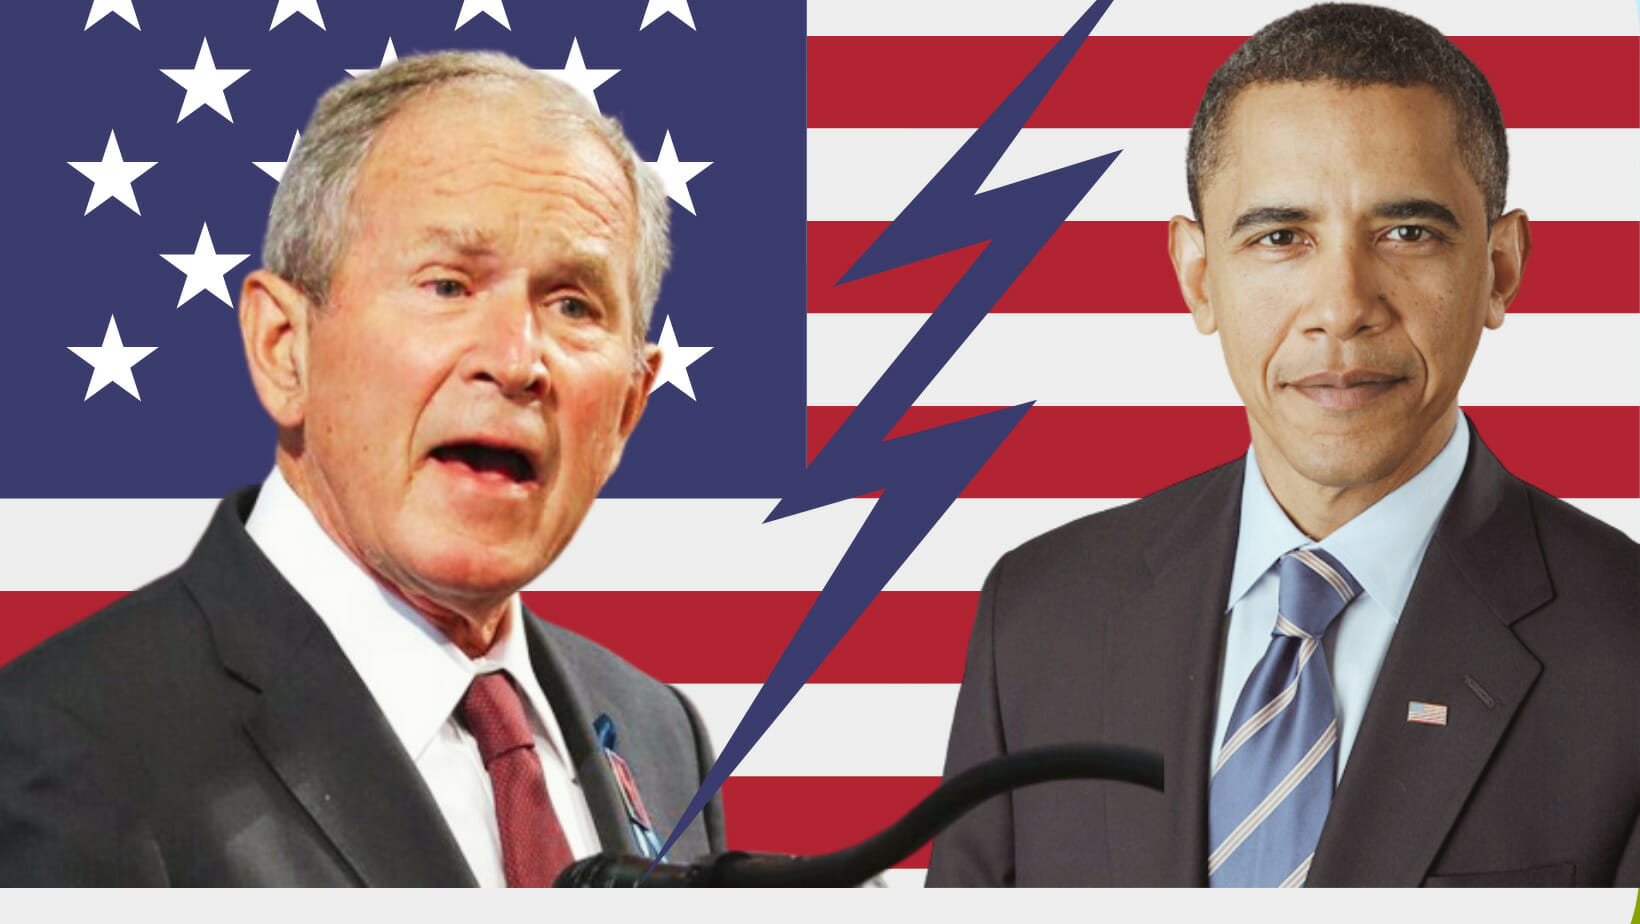 George Washington Bush vs Barack Obama